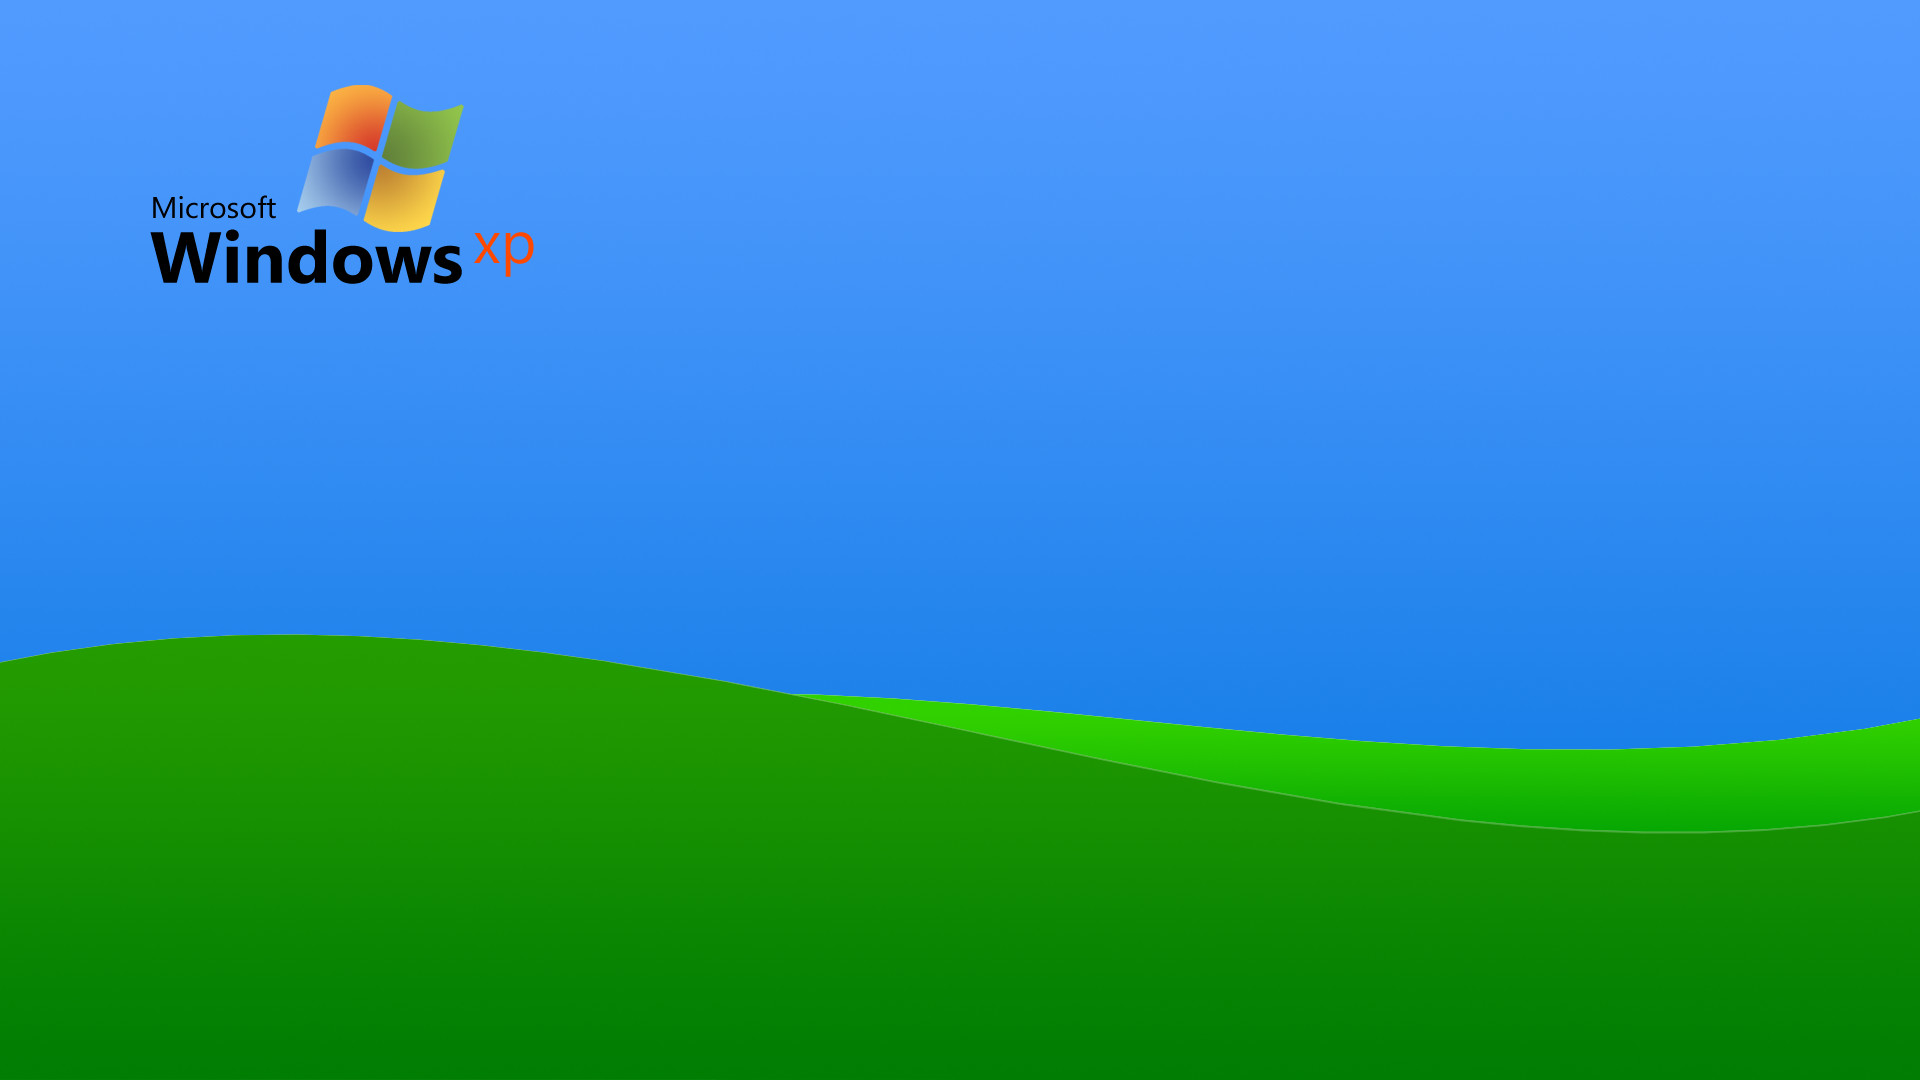 Windows Xp Live Wallpaper - Windows 10 Wallpaper Hd 1920x1080 Download -  1920x1080 Wallpaper 